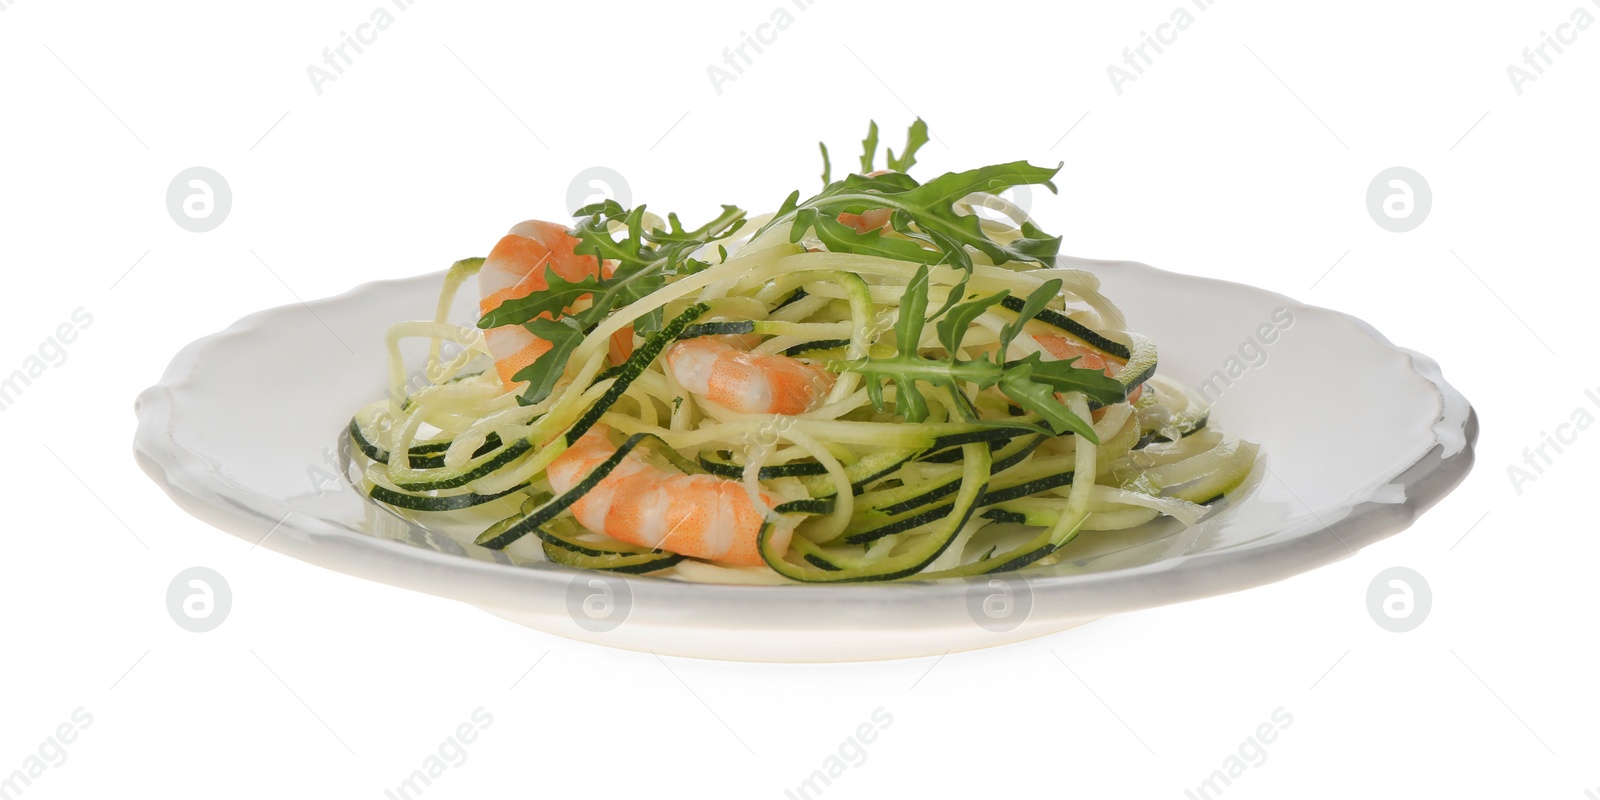 Photo of Tasty zucchini pasta with shrimps and arugula isolated on white